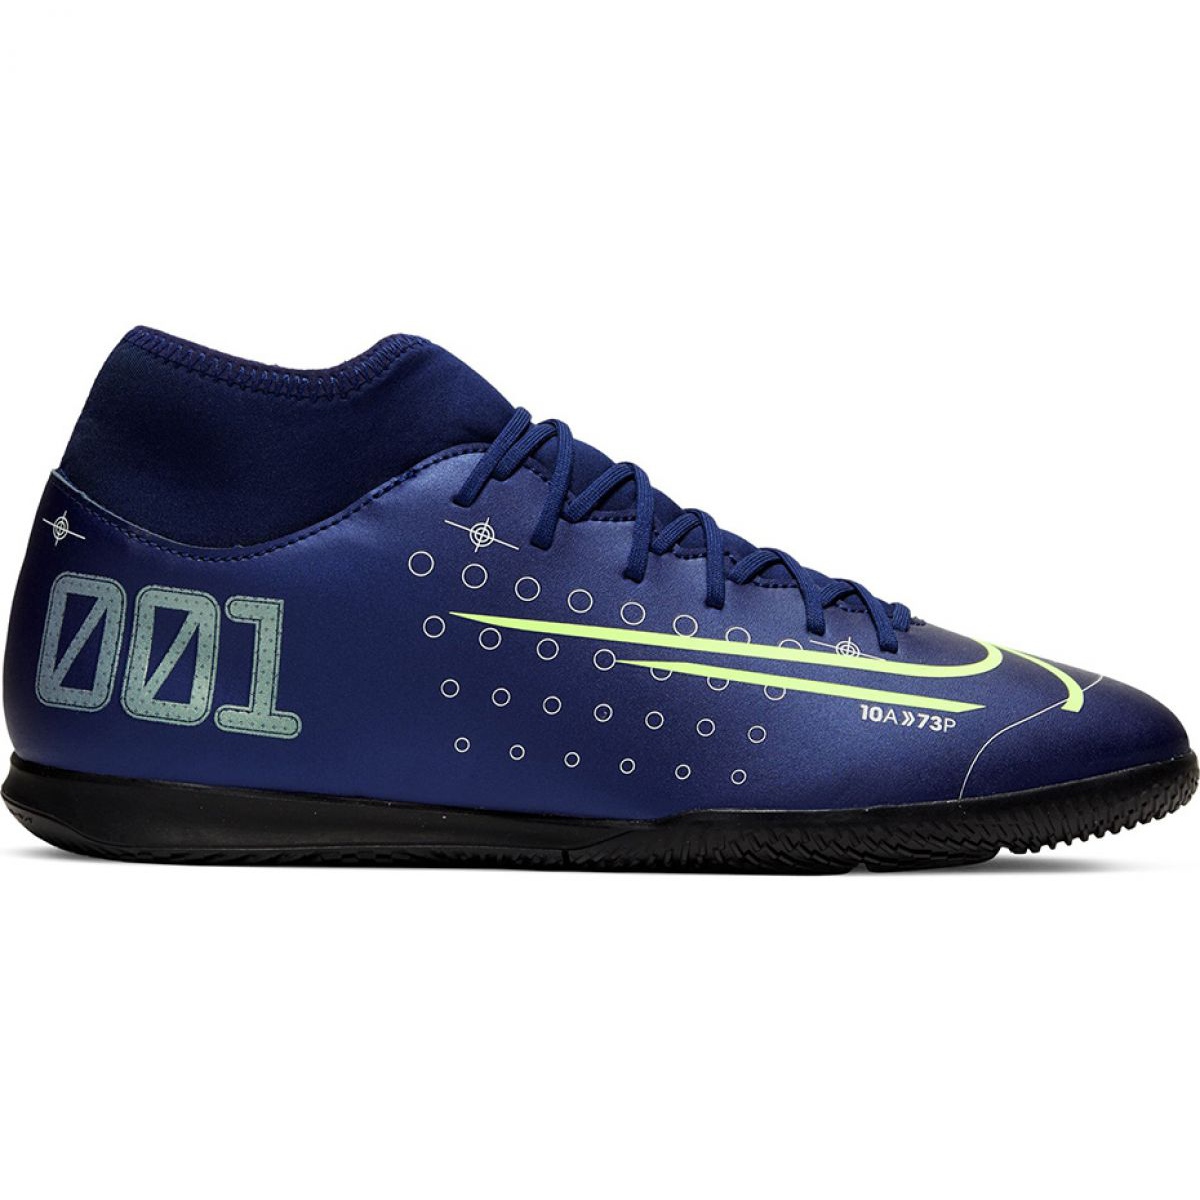 Buty halowe Nike Mercurial Superfly 7 Club Mds Ic M BQ5462-401 niebieskie granatowe